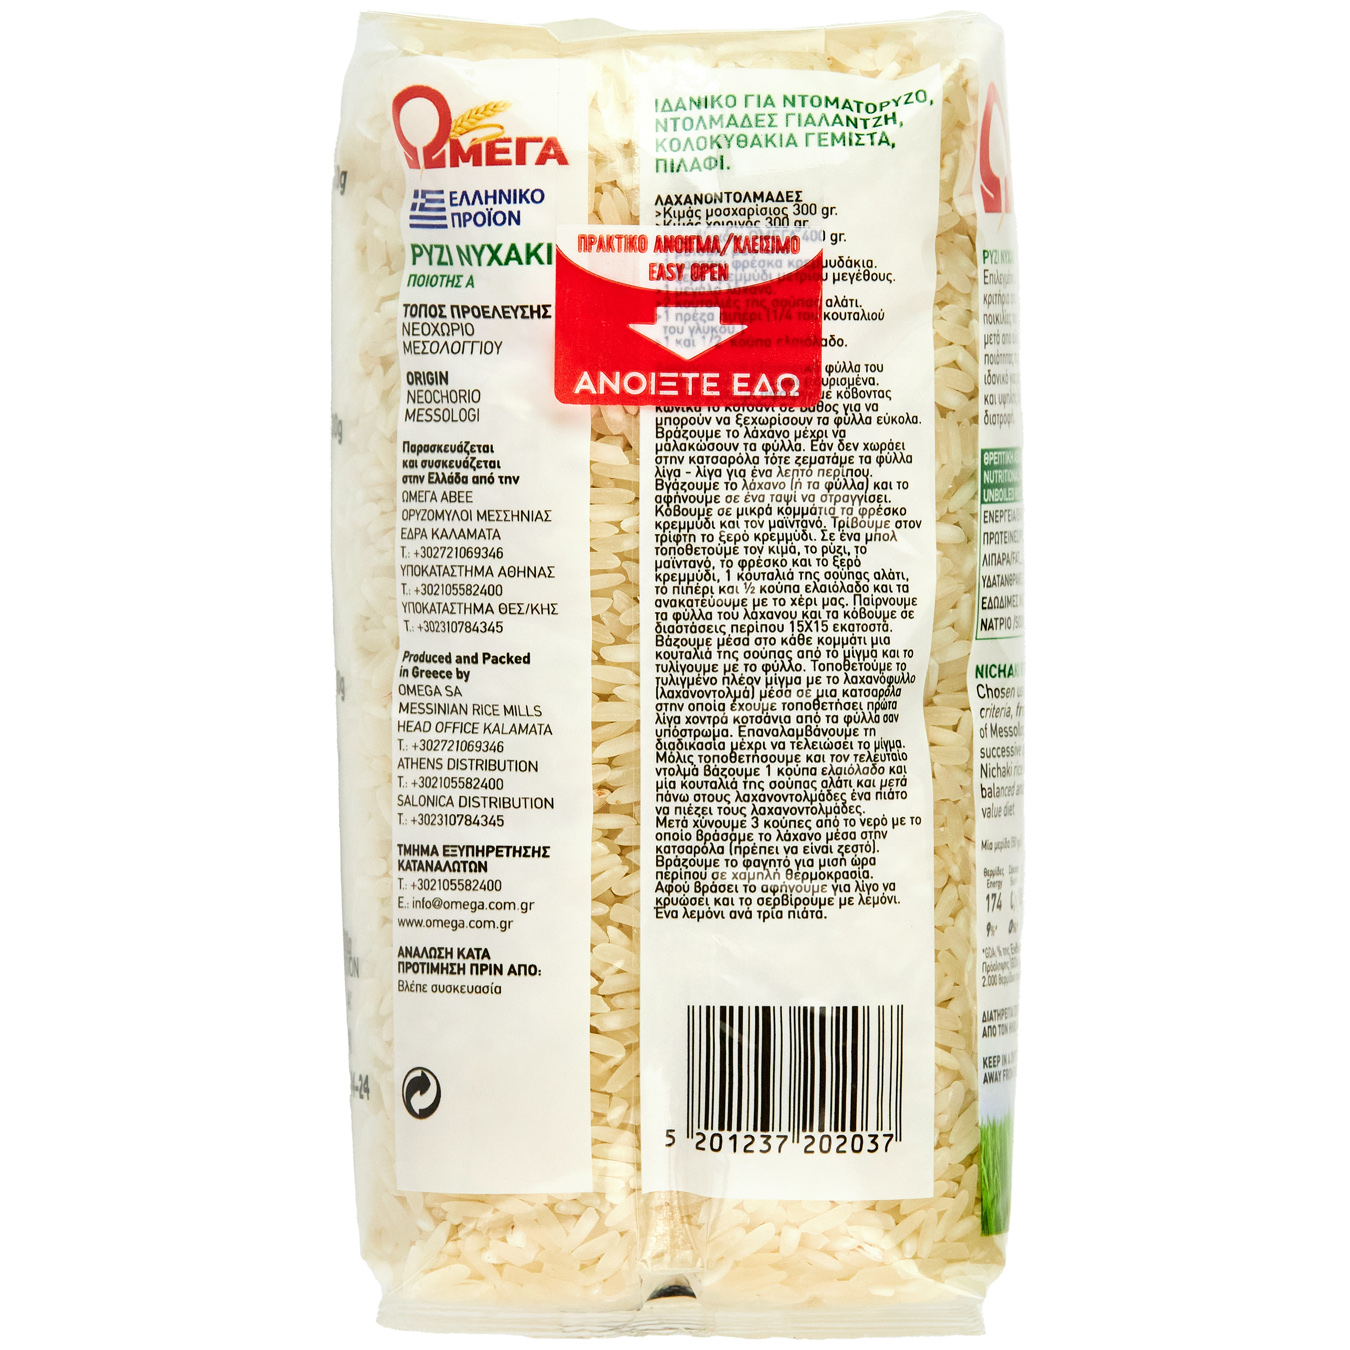 Nichaki Omega long rice 500g 2